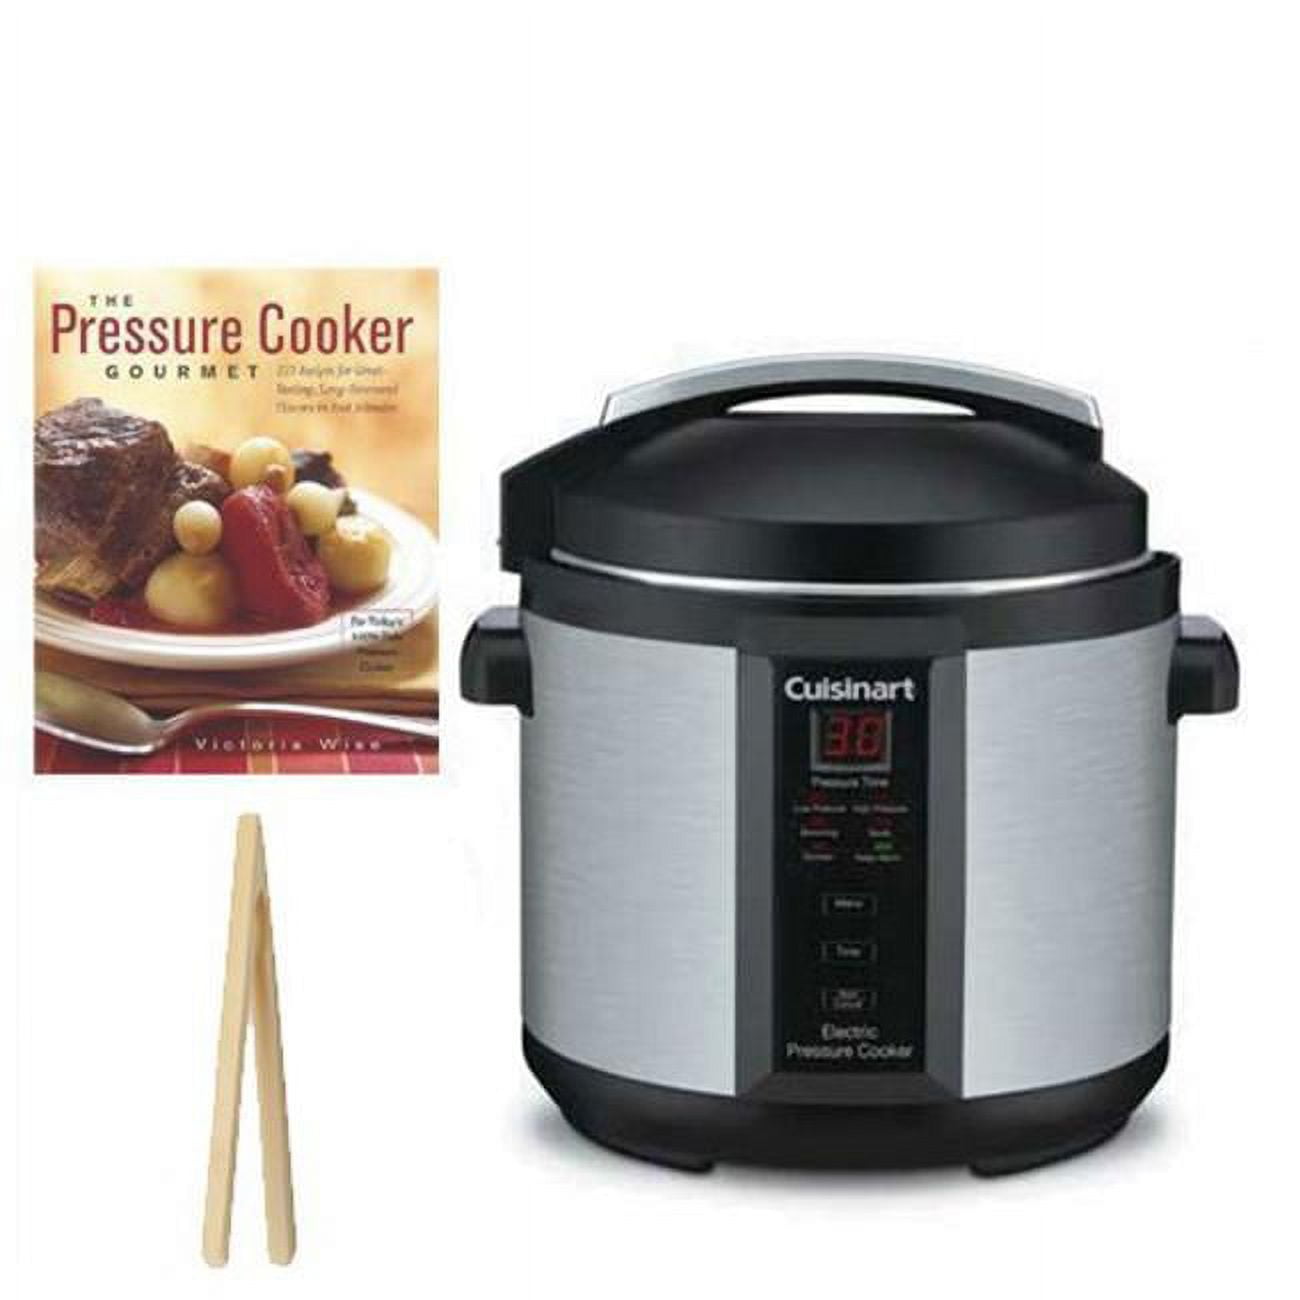 Cuisinart CPC-600 Pressure Cooker Review